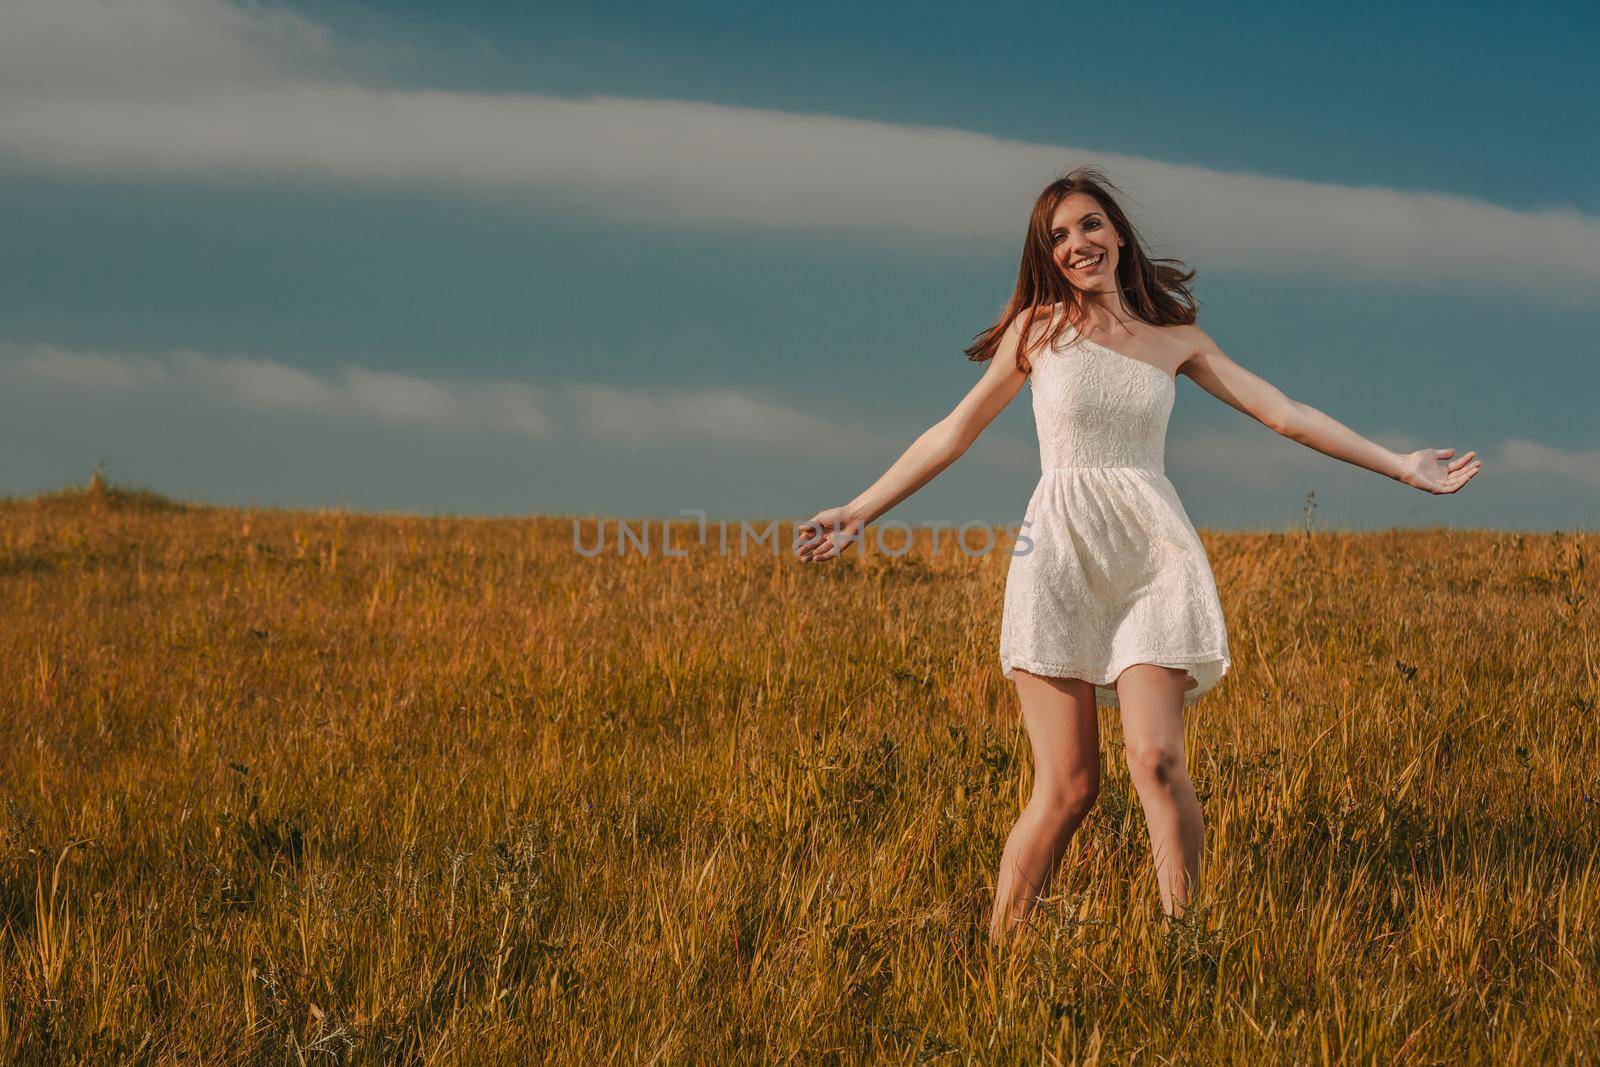 Young beautiful woman walking on a meadow wearing a white dress